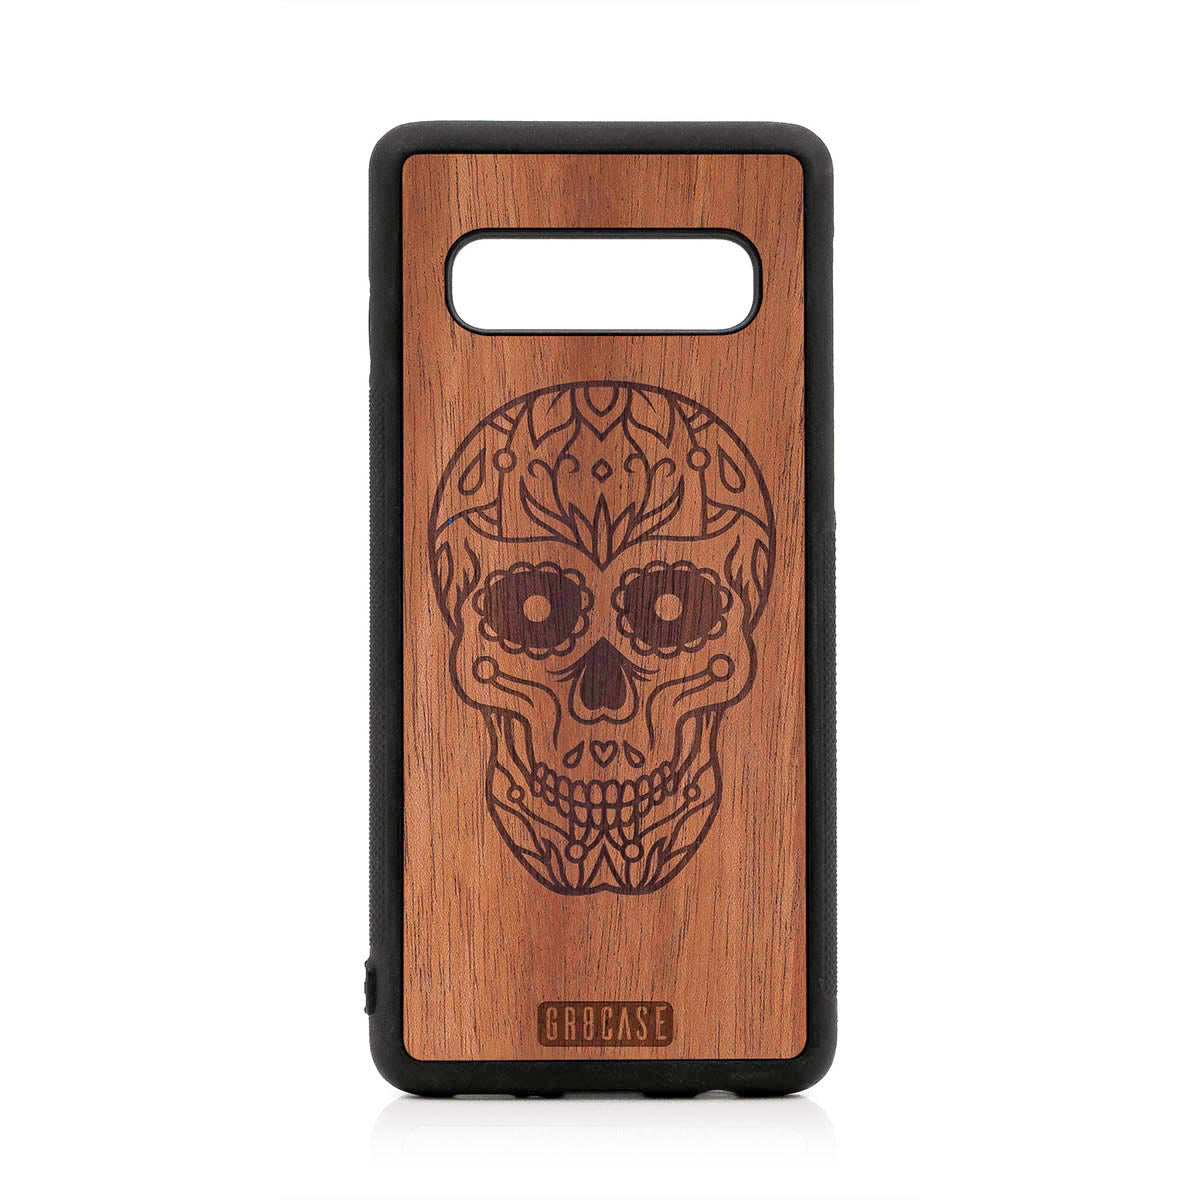 Sugar Skull Design Wood Case For Samsung Galaxy S10 by GR8CASE